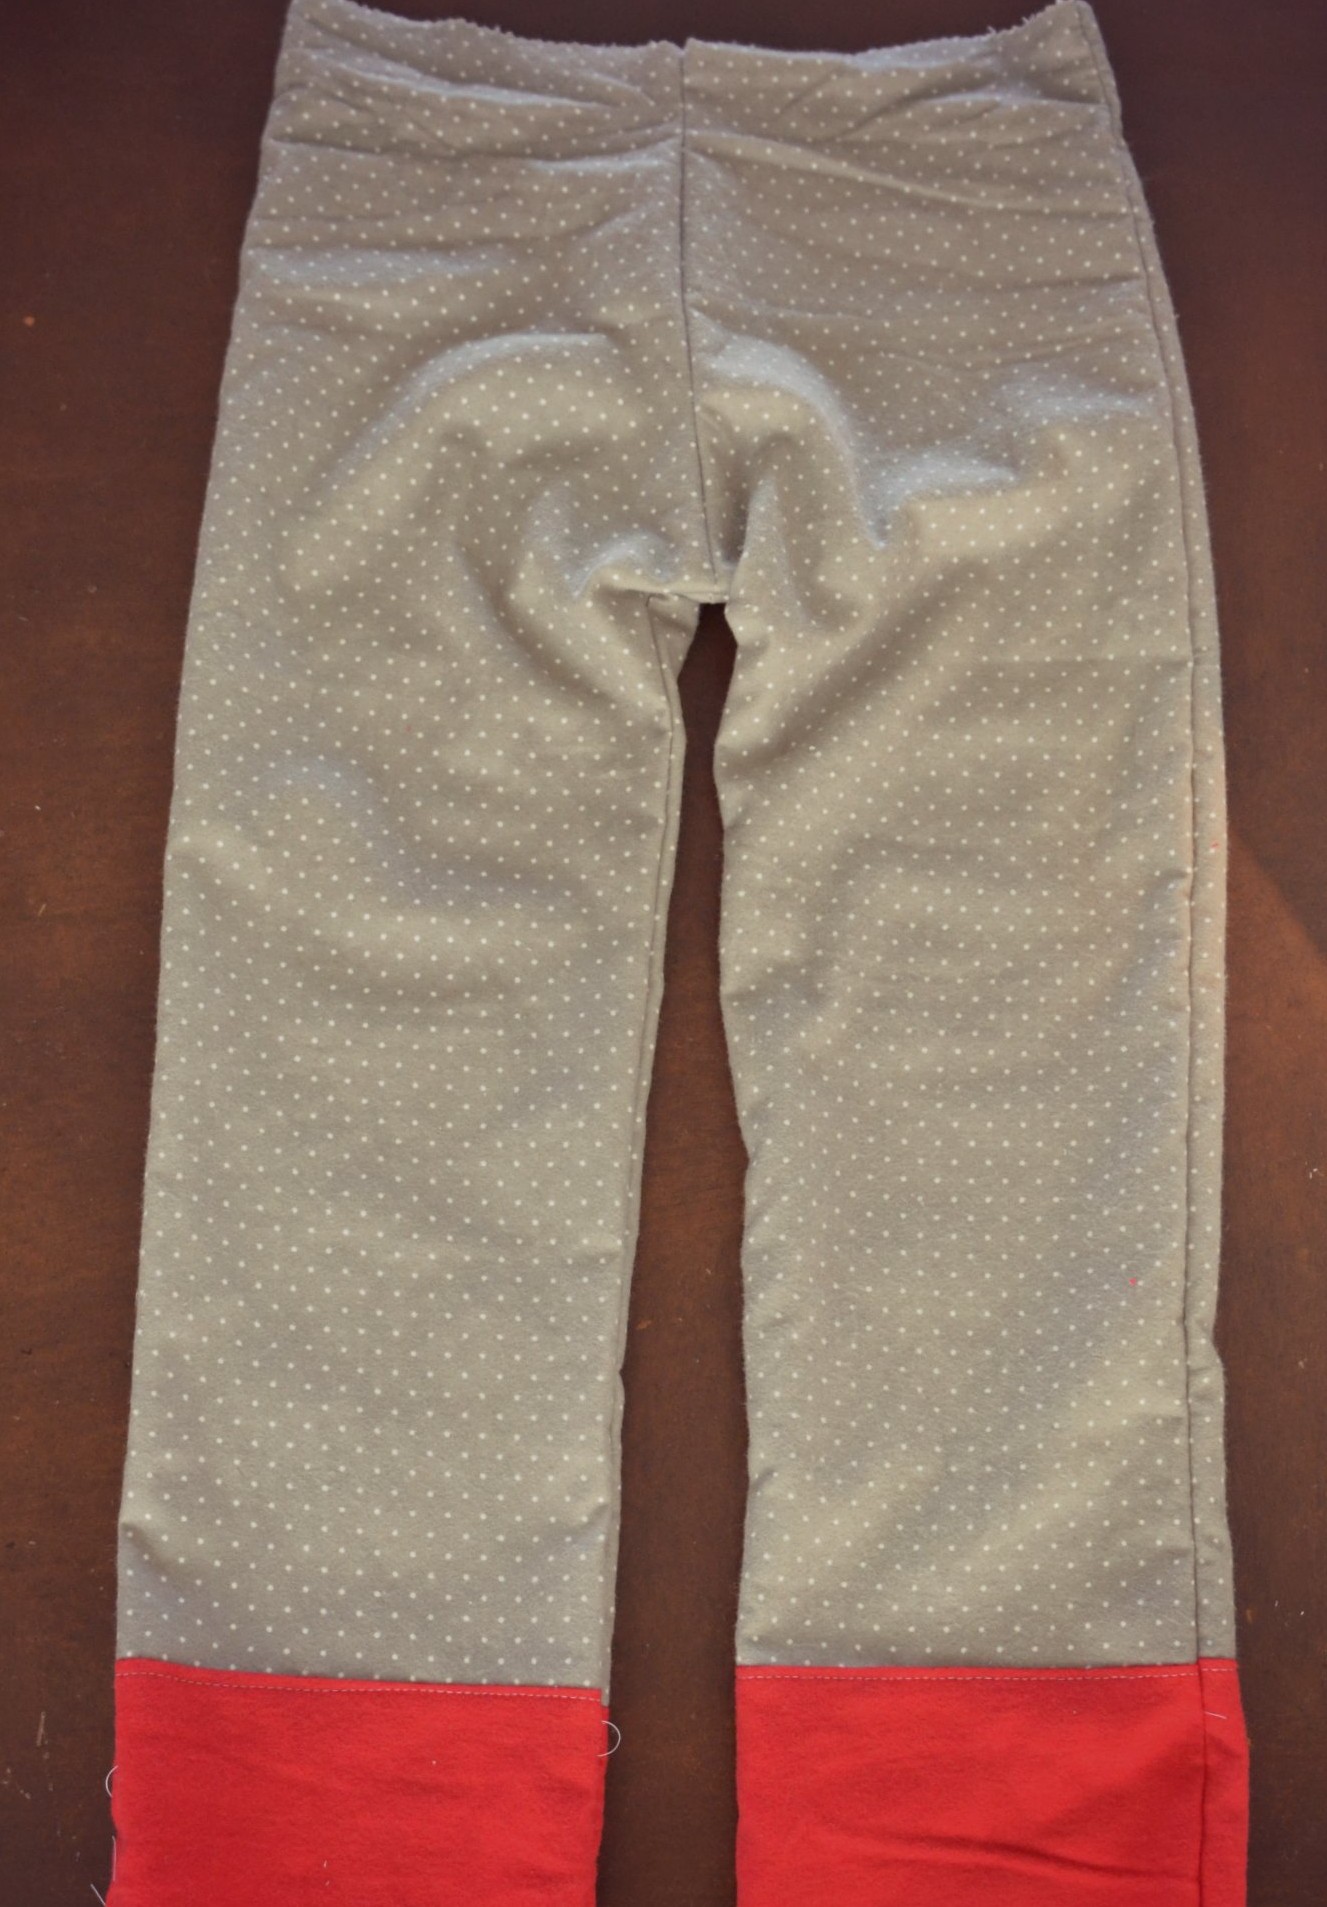 Easy-to-Sew Pajama Pants | DIY Pajama Pants | Basic Sewing